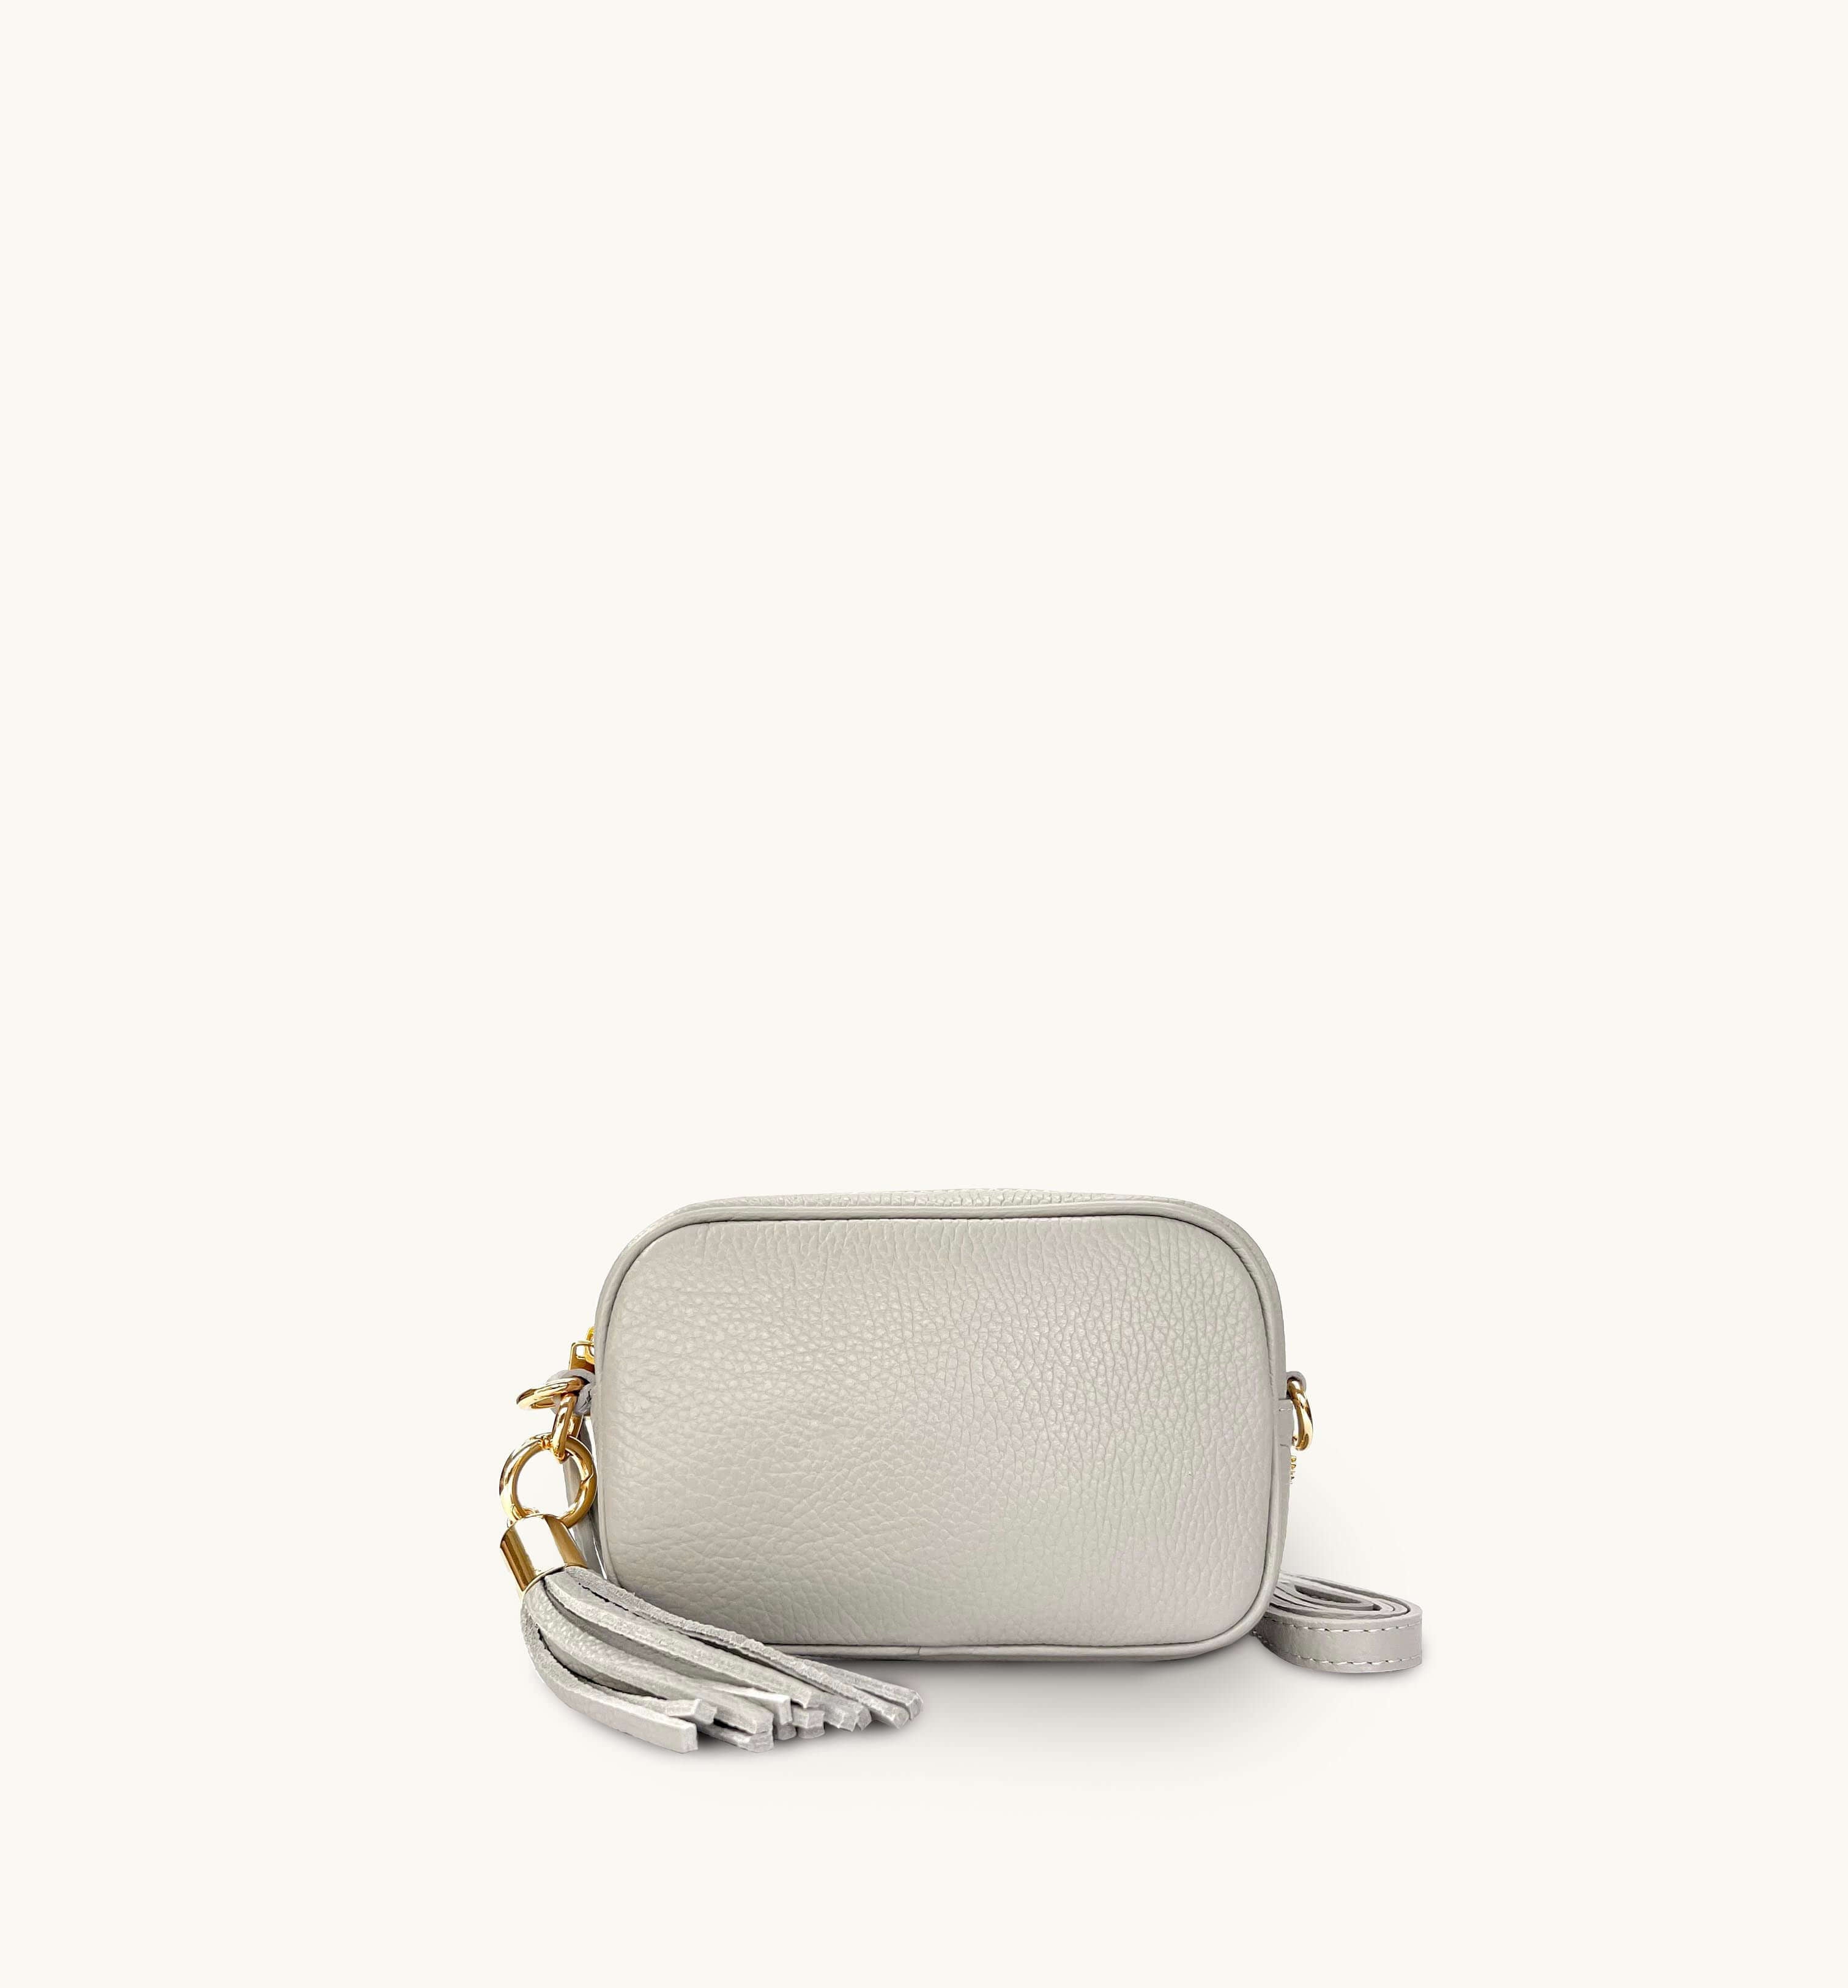 The Mini Tassel Light Grey Leather Phone Bag With Pistachio Cross-Stitch Strap